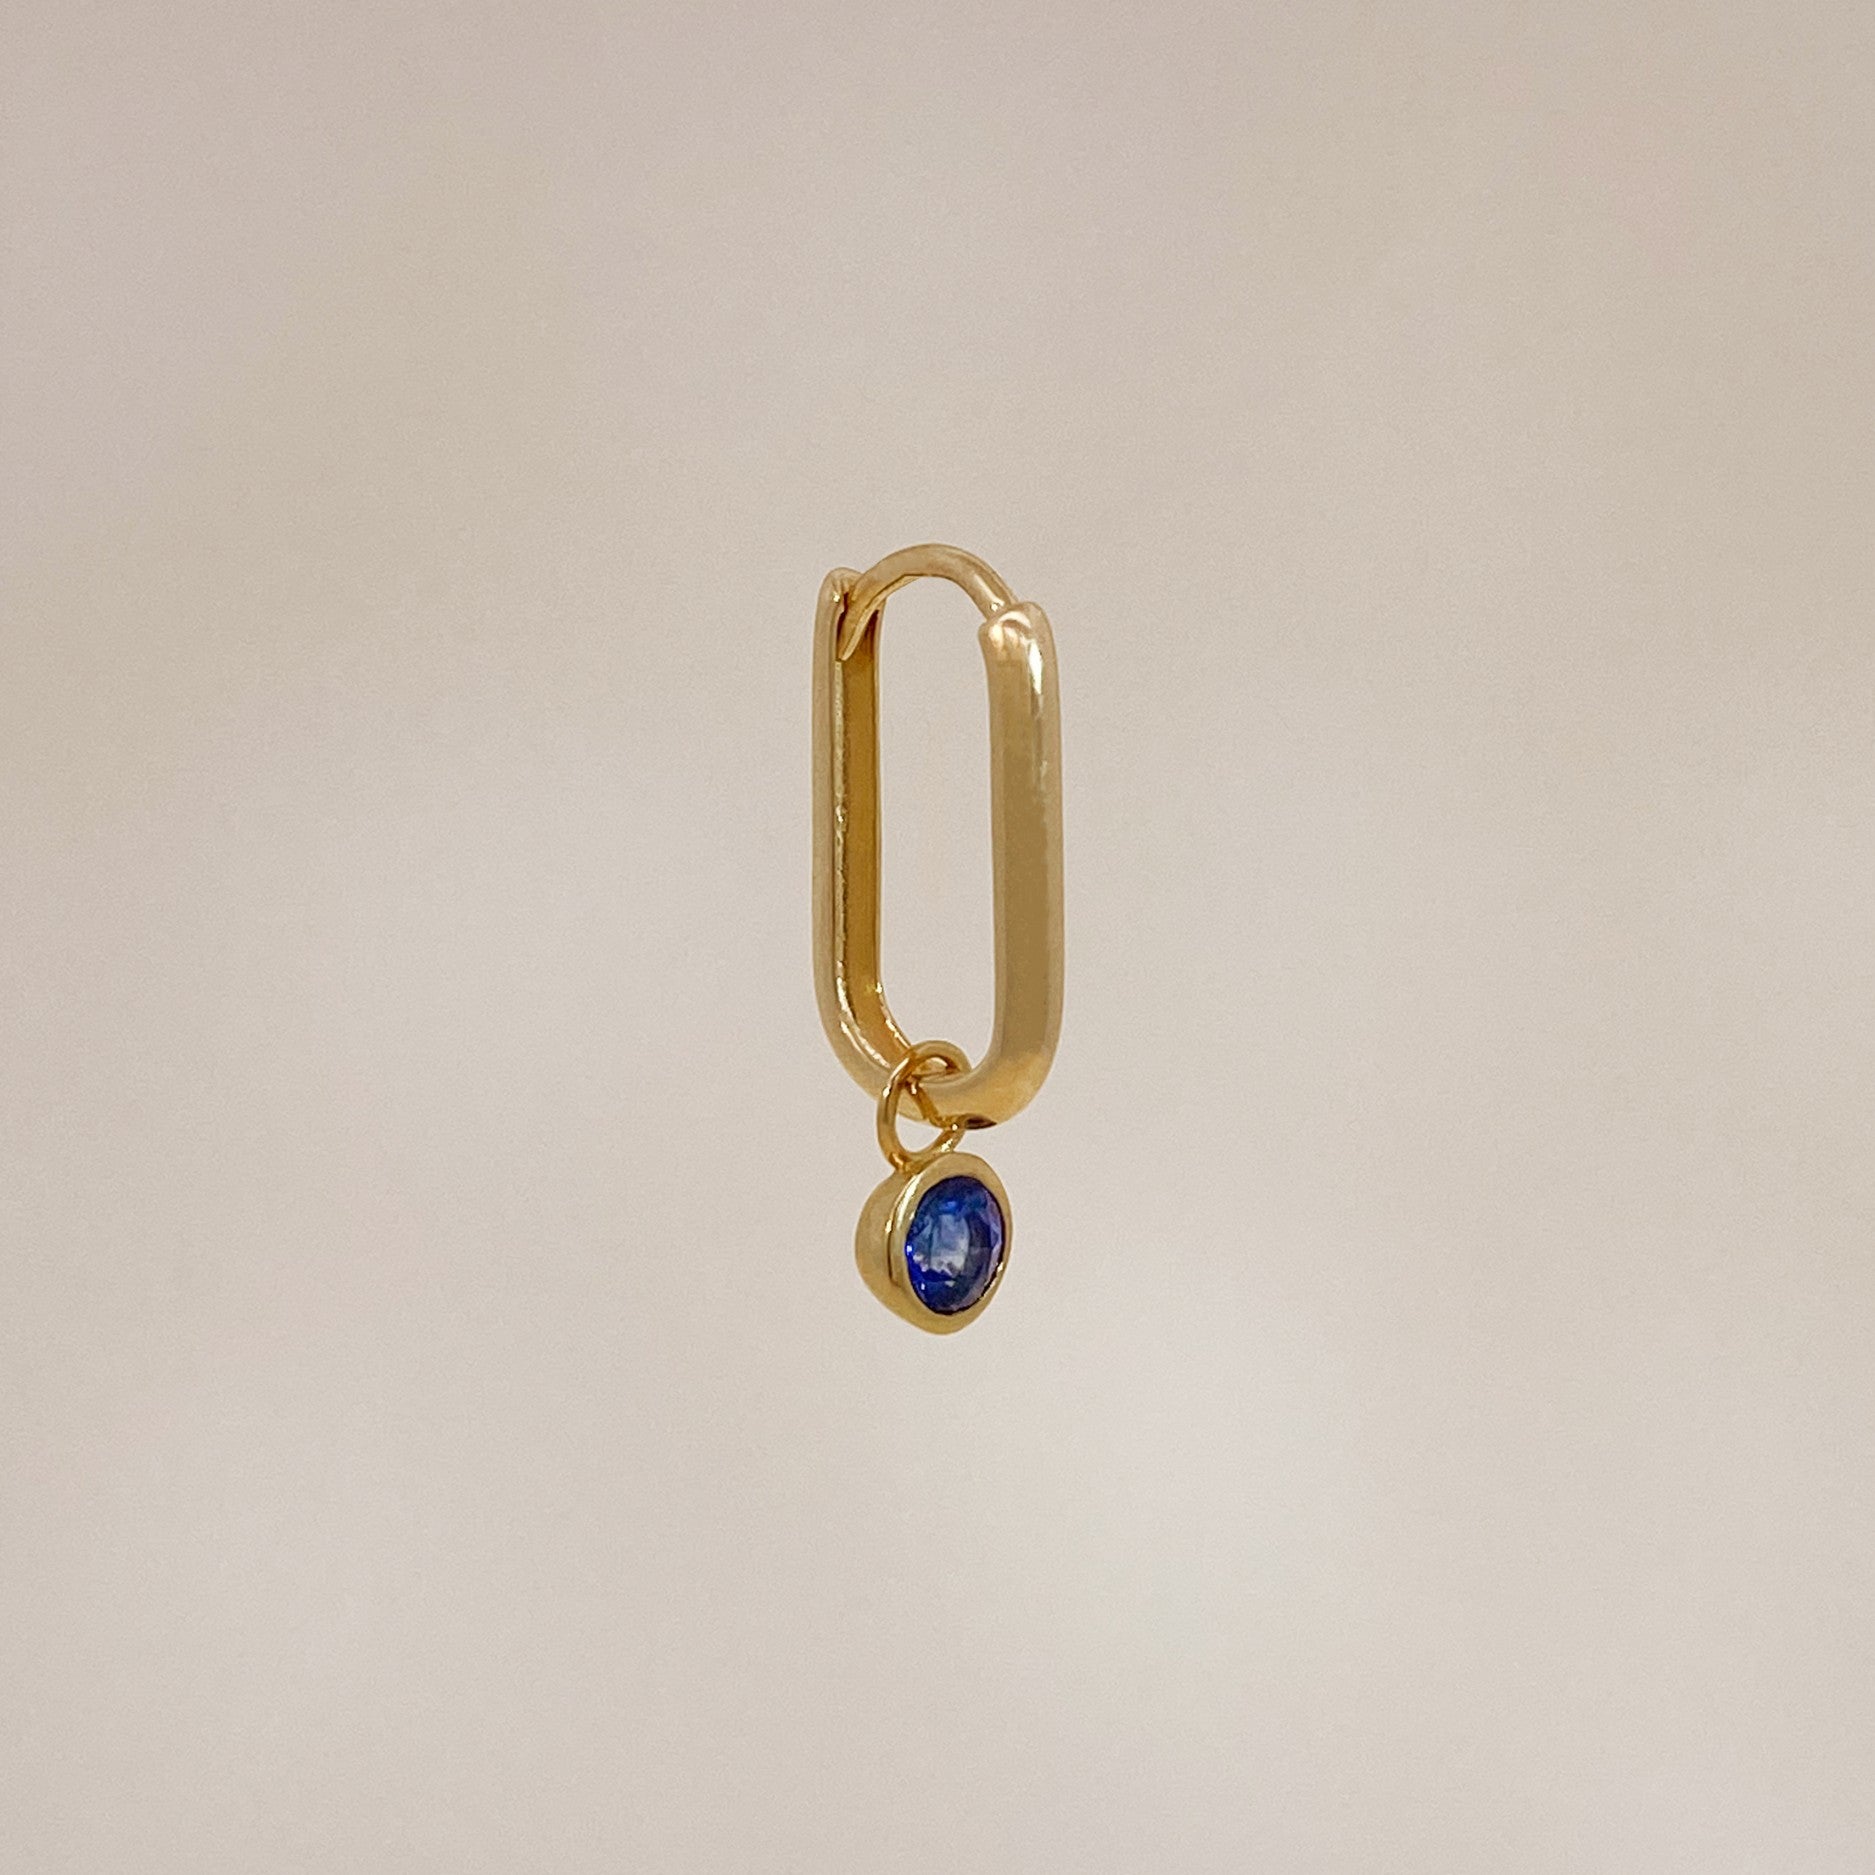 Sapphire earring charm